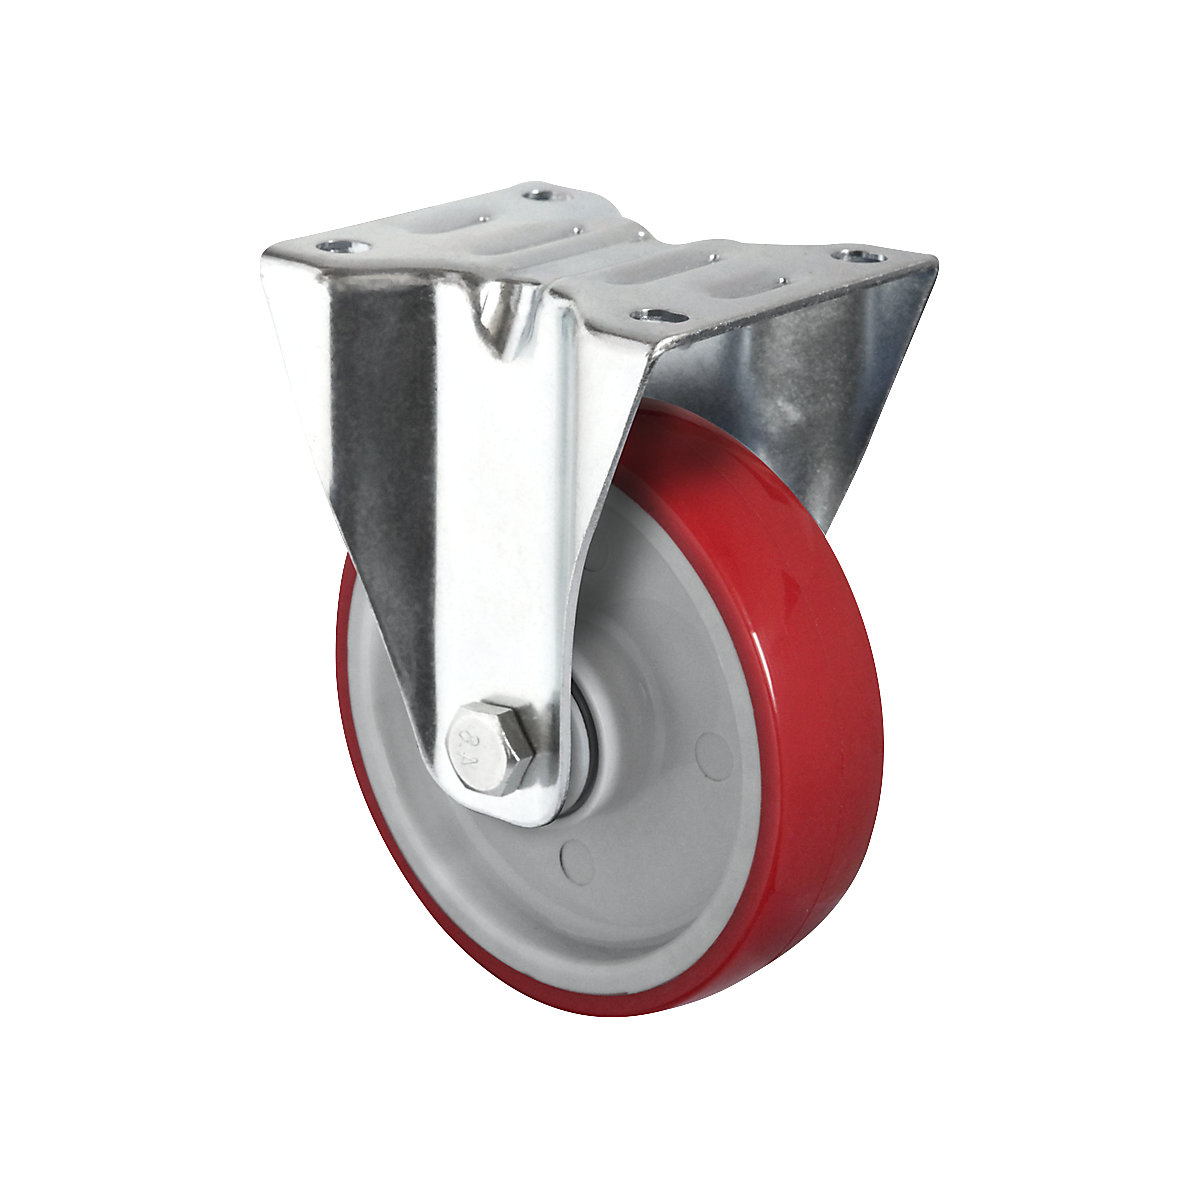 EUROKRAFTbasic PU-Reifen, rot auf Polyamidfelge, Rad-Ø x Breite 100 x 32 mm, ab 2 Stk, Bockrolle